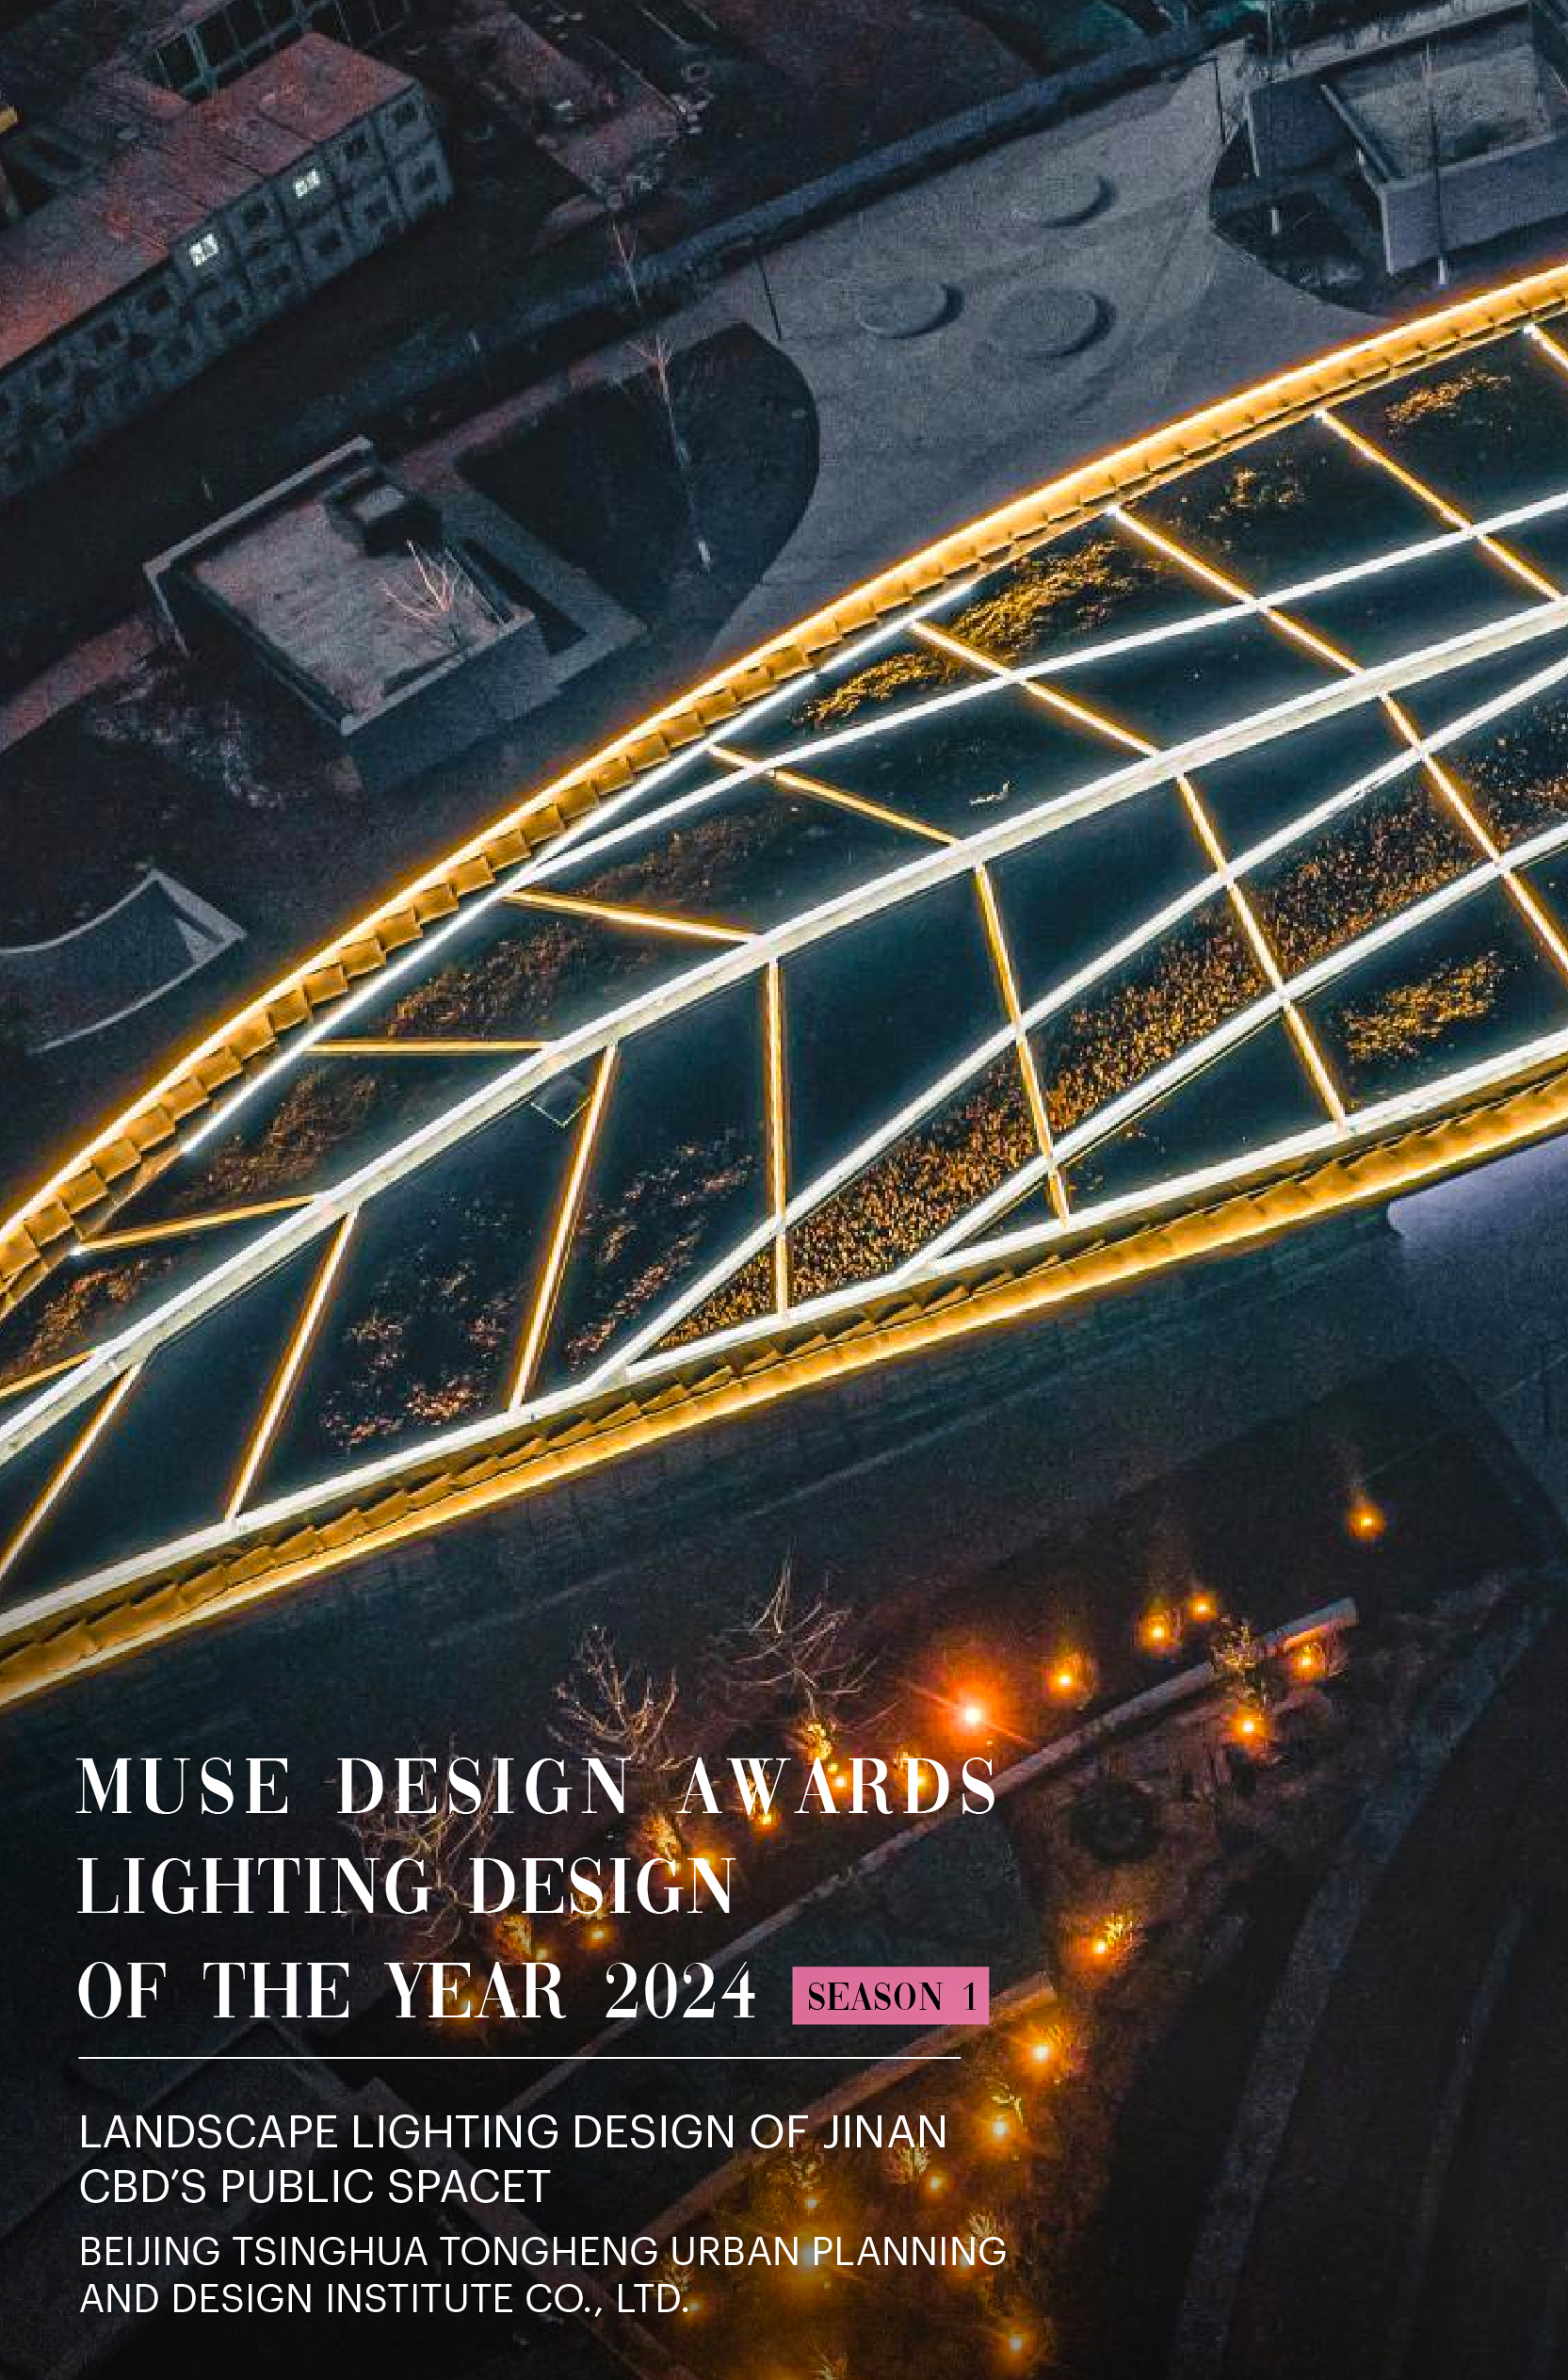 MUSE Design - Lighting Design Awards 2023